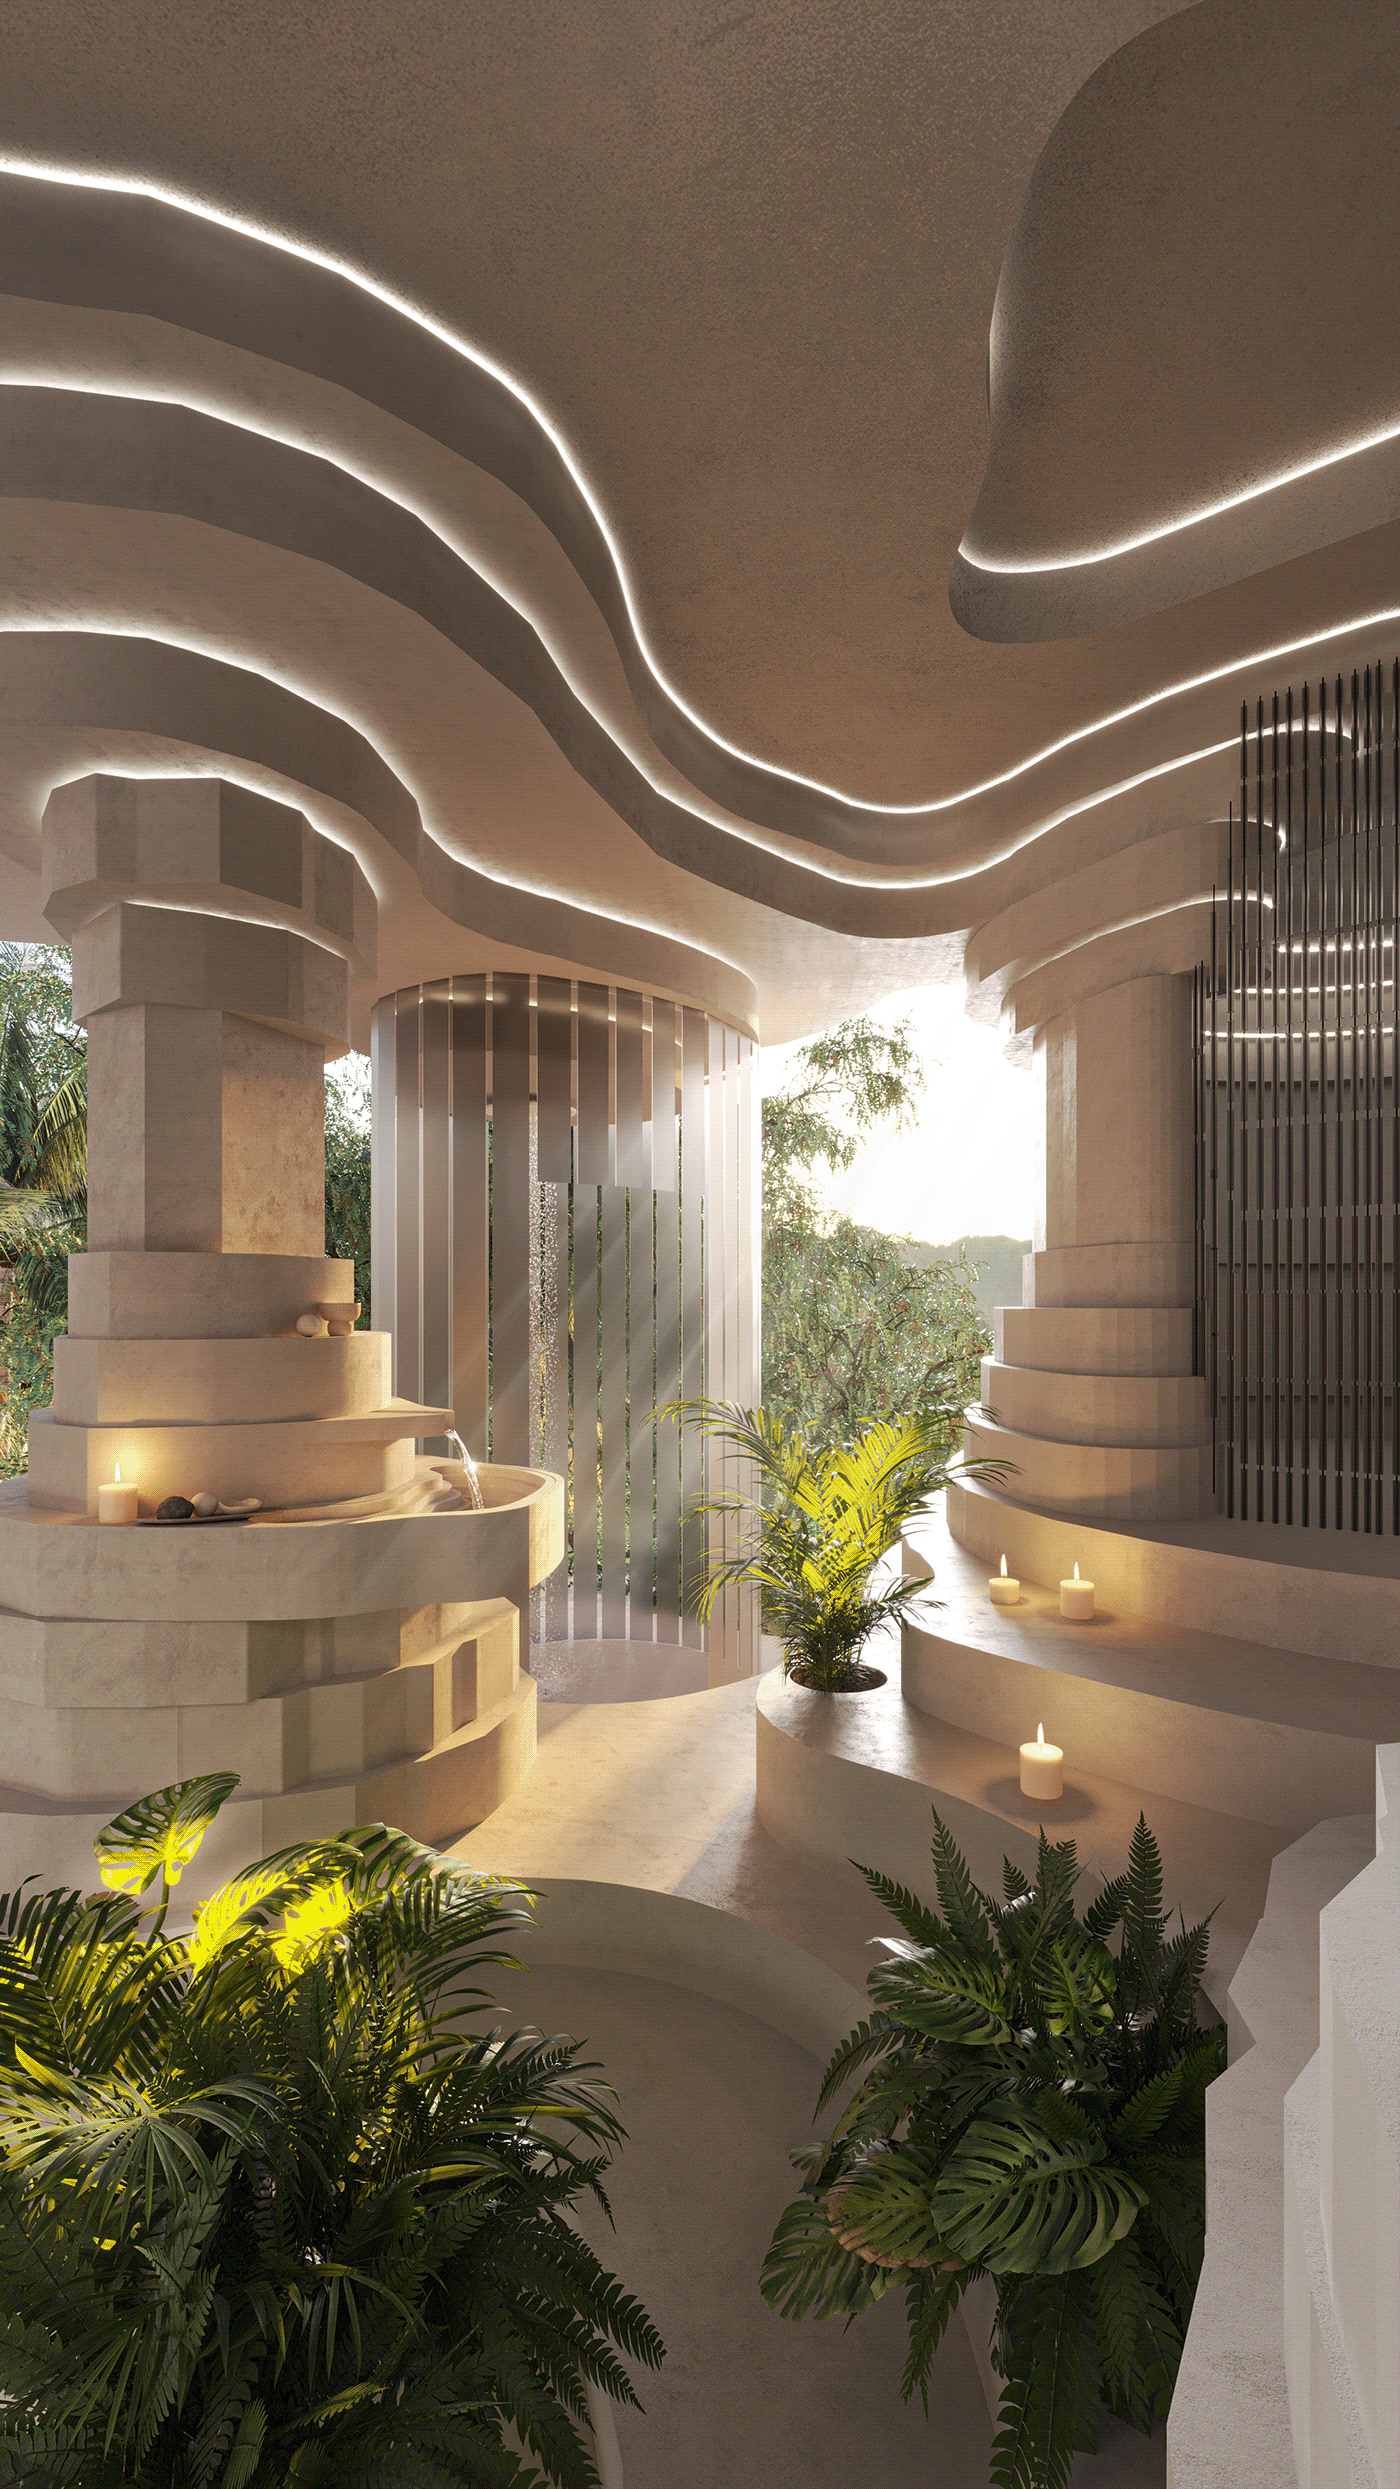 Architectural rendering visualization 3dvisualization 3ds max interior design  Render exterior architecture archviz CGI